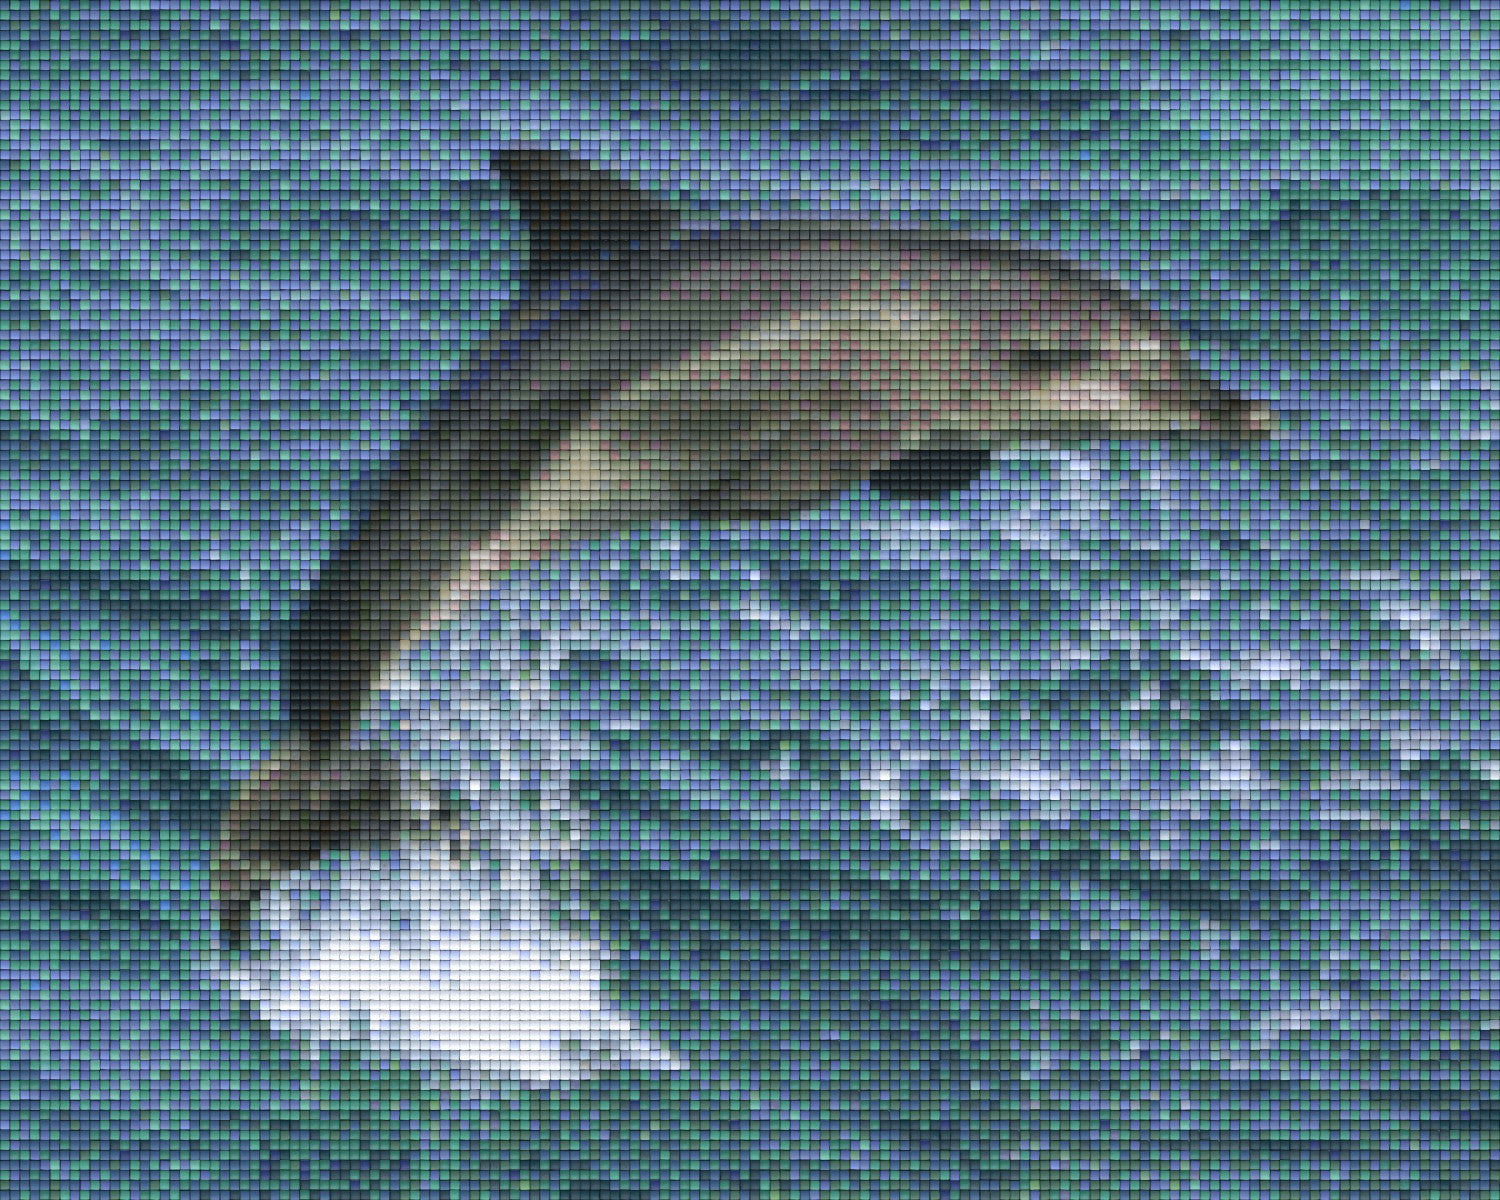 Pixelhobby Klassik Vorlage - springender Delfin